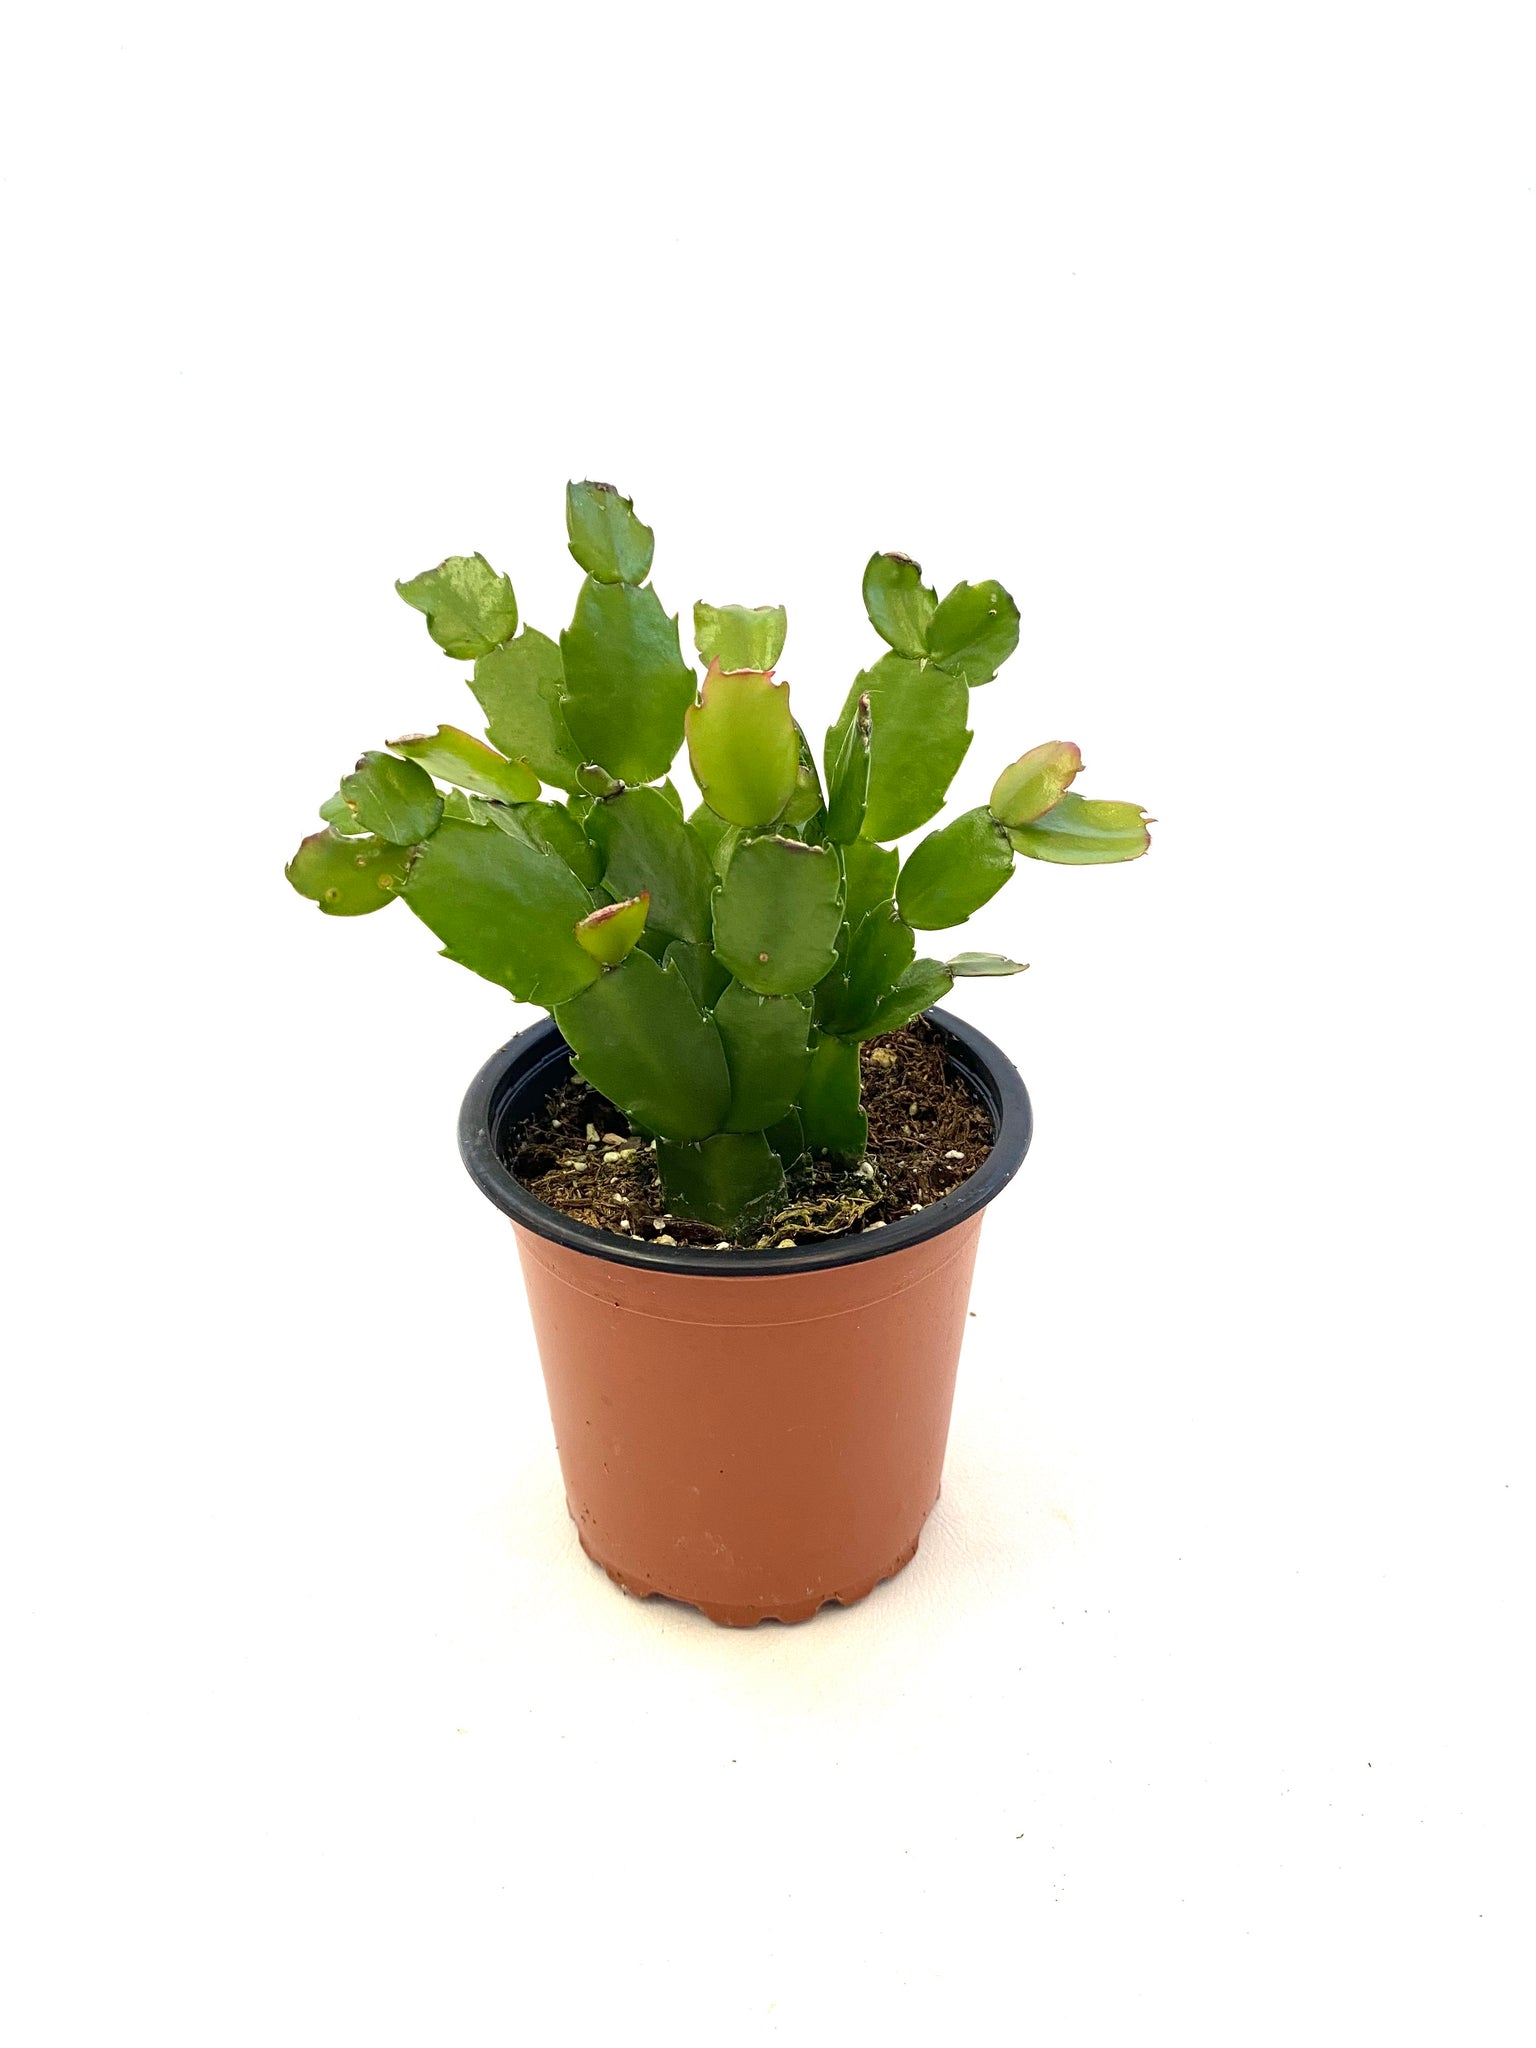 Christmas Cactus (Schlumbergera bridgesii)